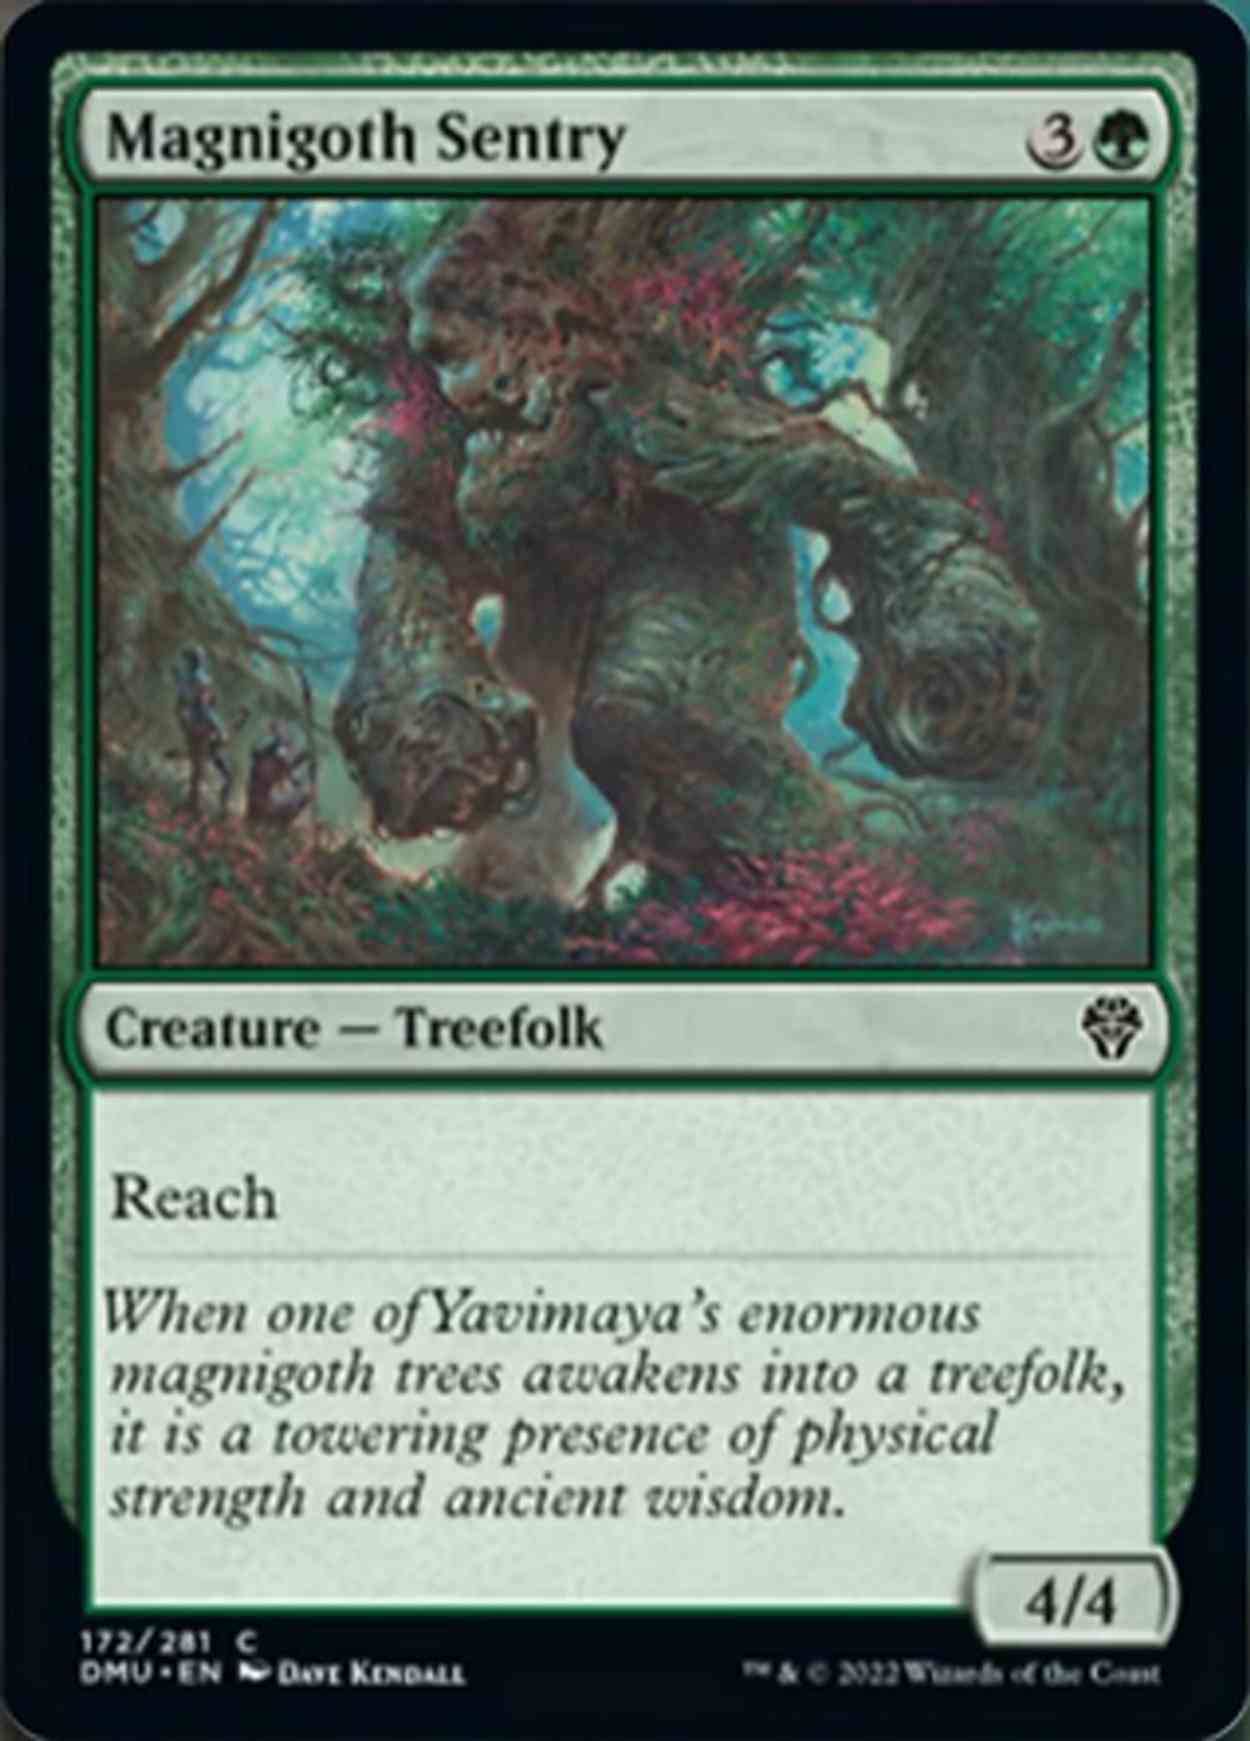 Magnigoth Sentry magic card front